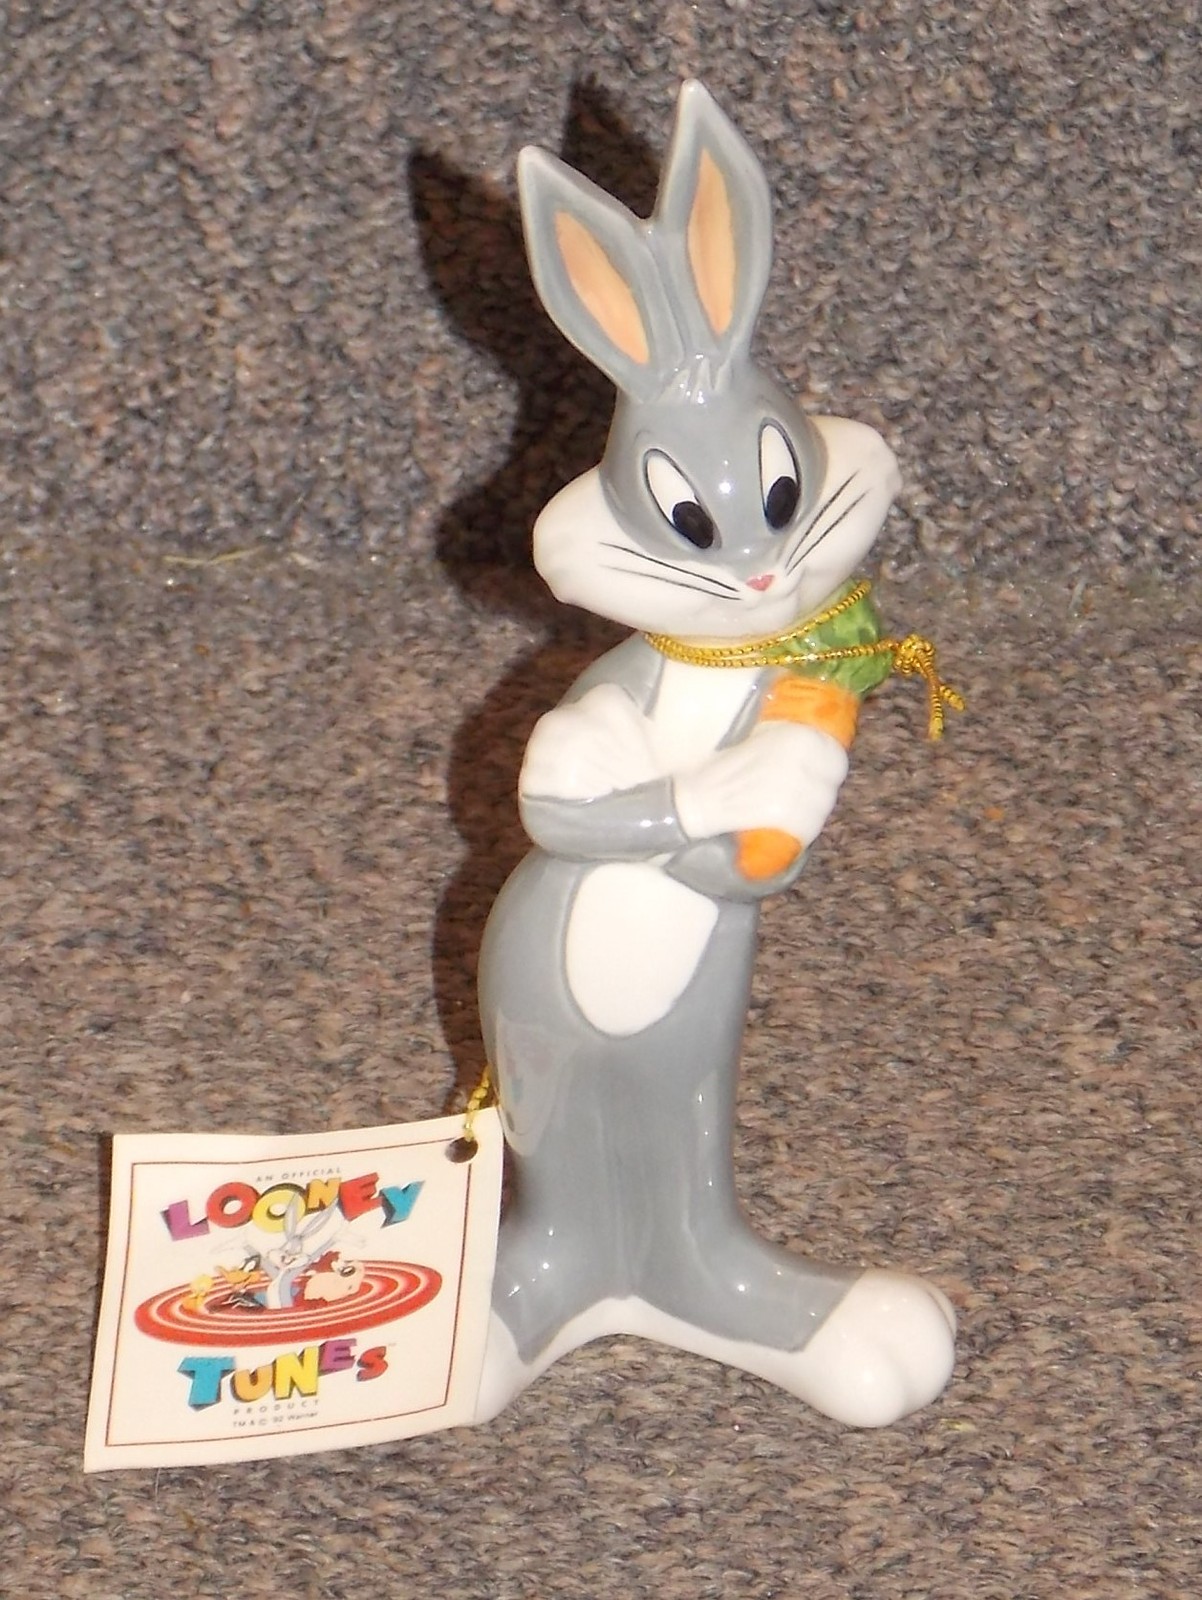 1992 Warner Bros Looney Tunes Bugs Bunny 6 inch Tall Ceramic Figurine - $29.99